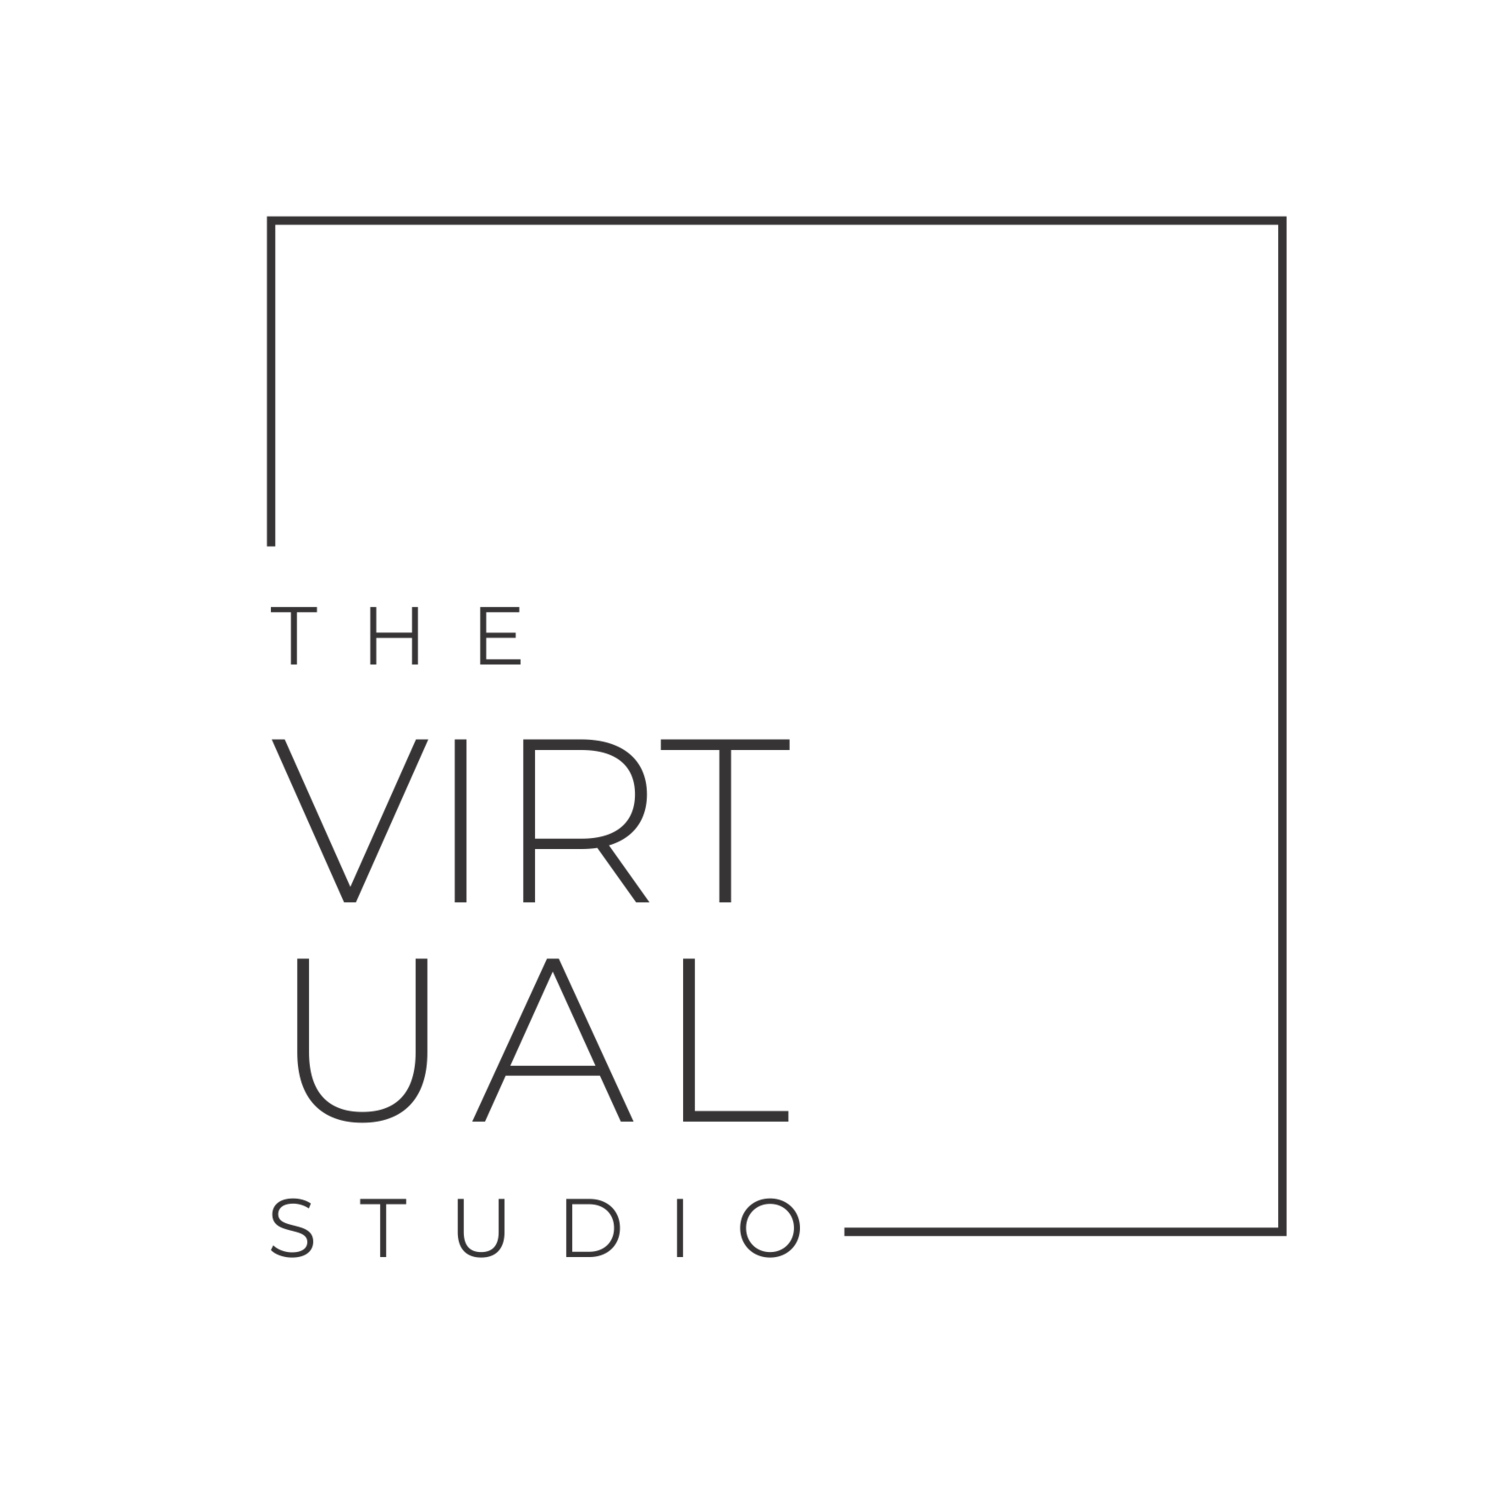 The Virtual Studio